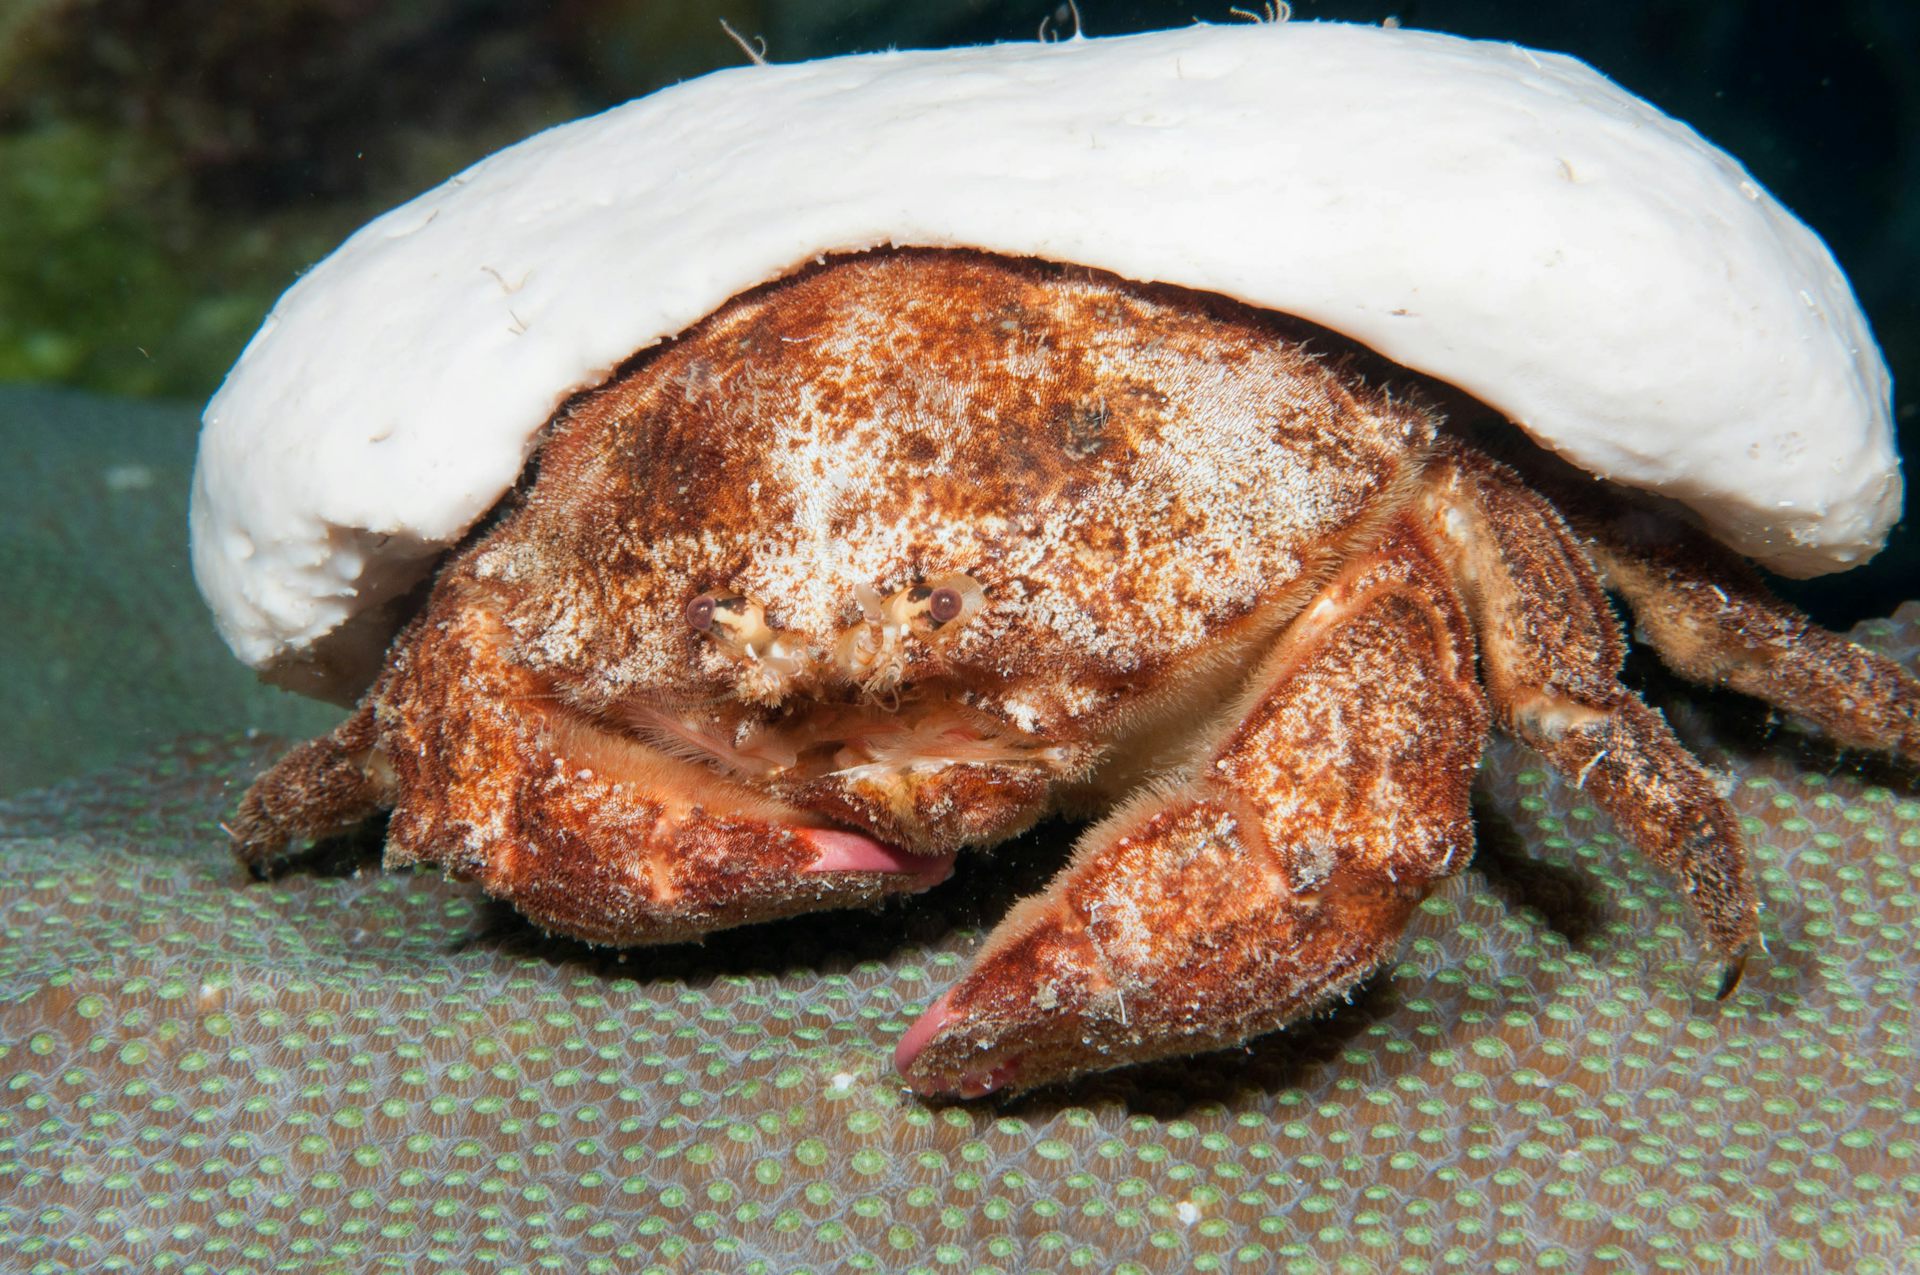 Redeye sponge crab